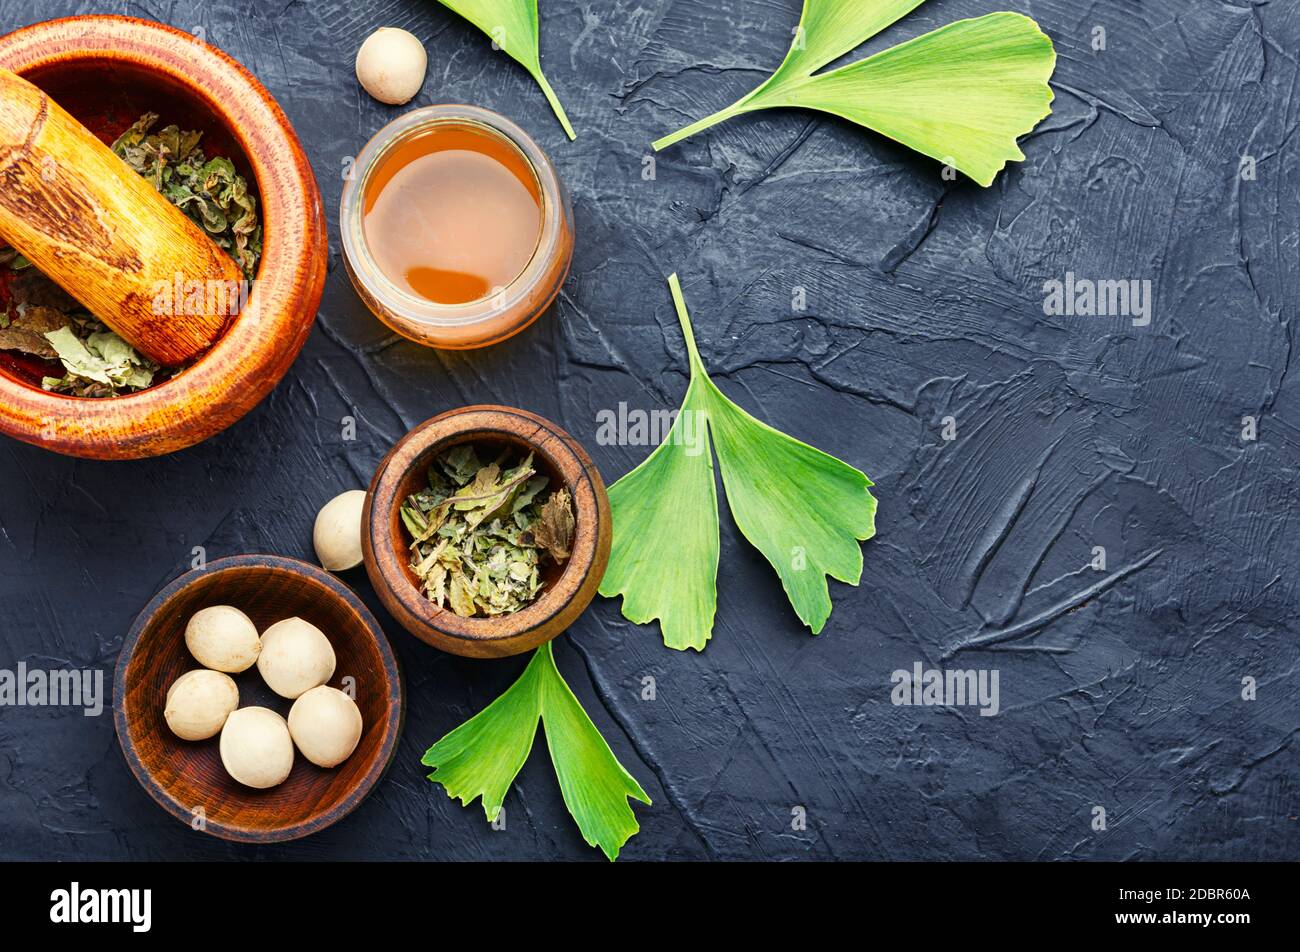 Healing properties of seeds and leaves of ginkgo biloba in herbal medicine. Stock Photo